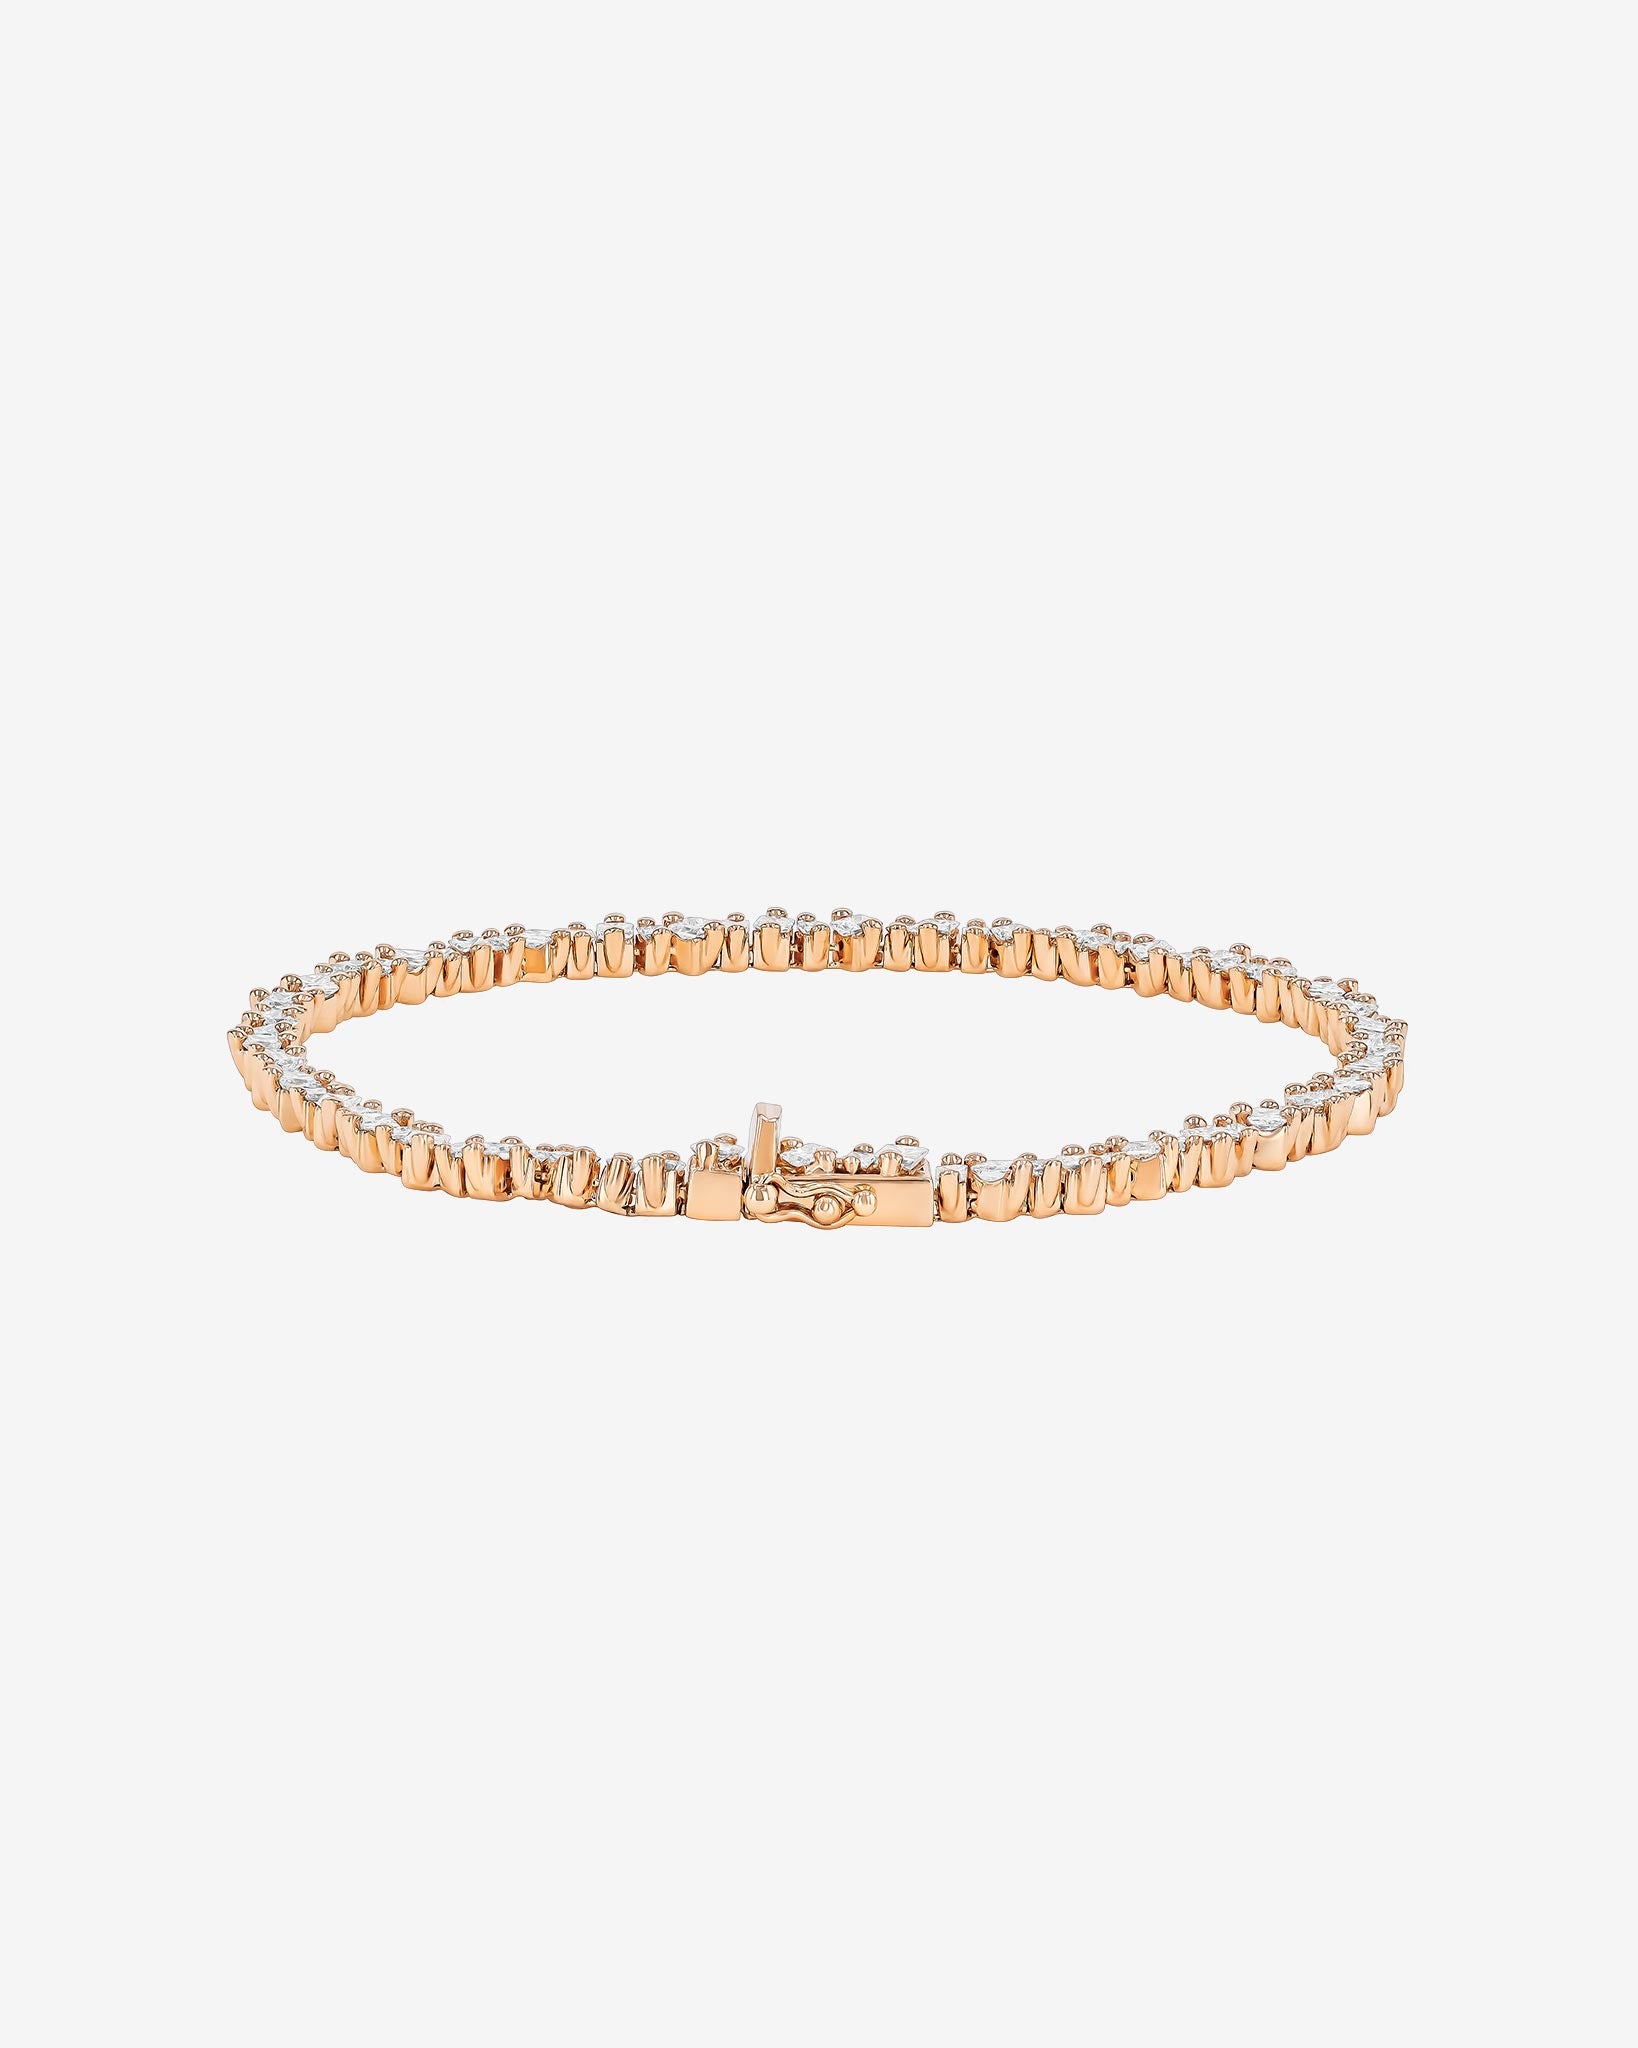 Suzanne Kalan La Fantaisie Cosmic Diamond Tennis Bracelet in 18k rose gold